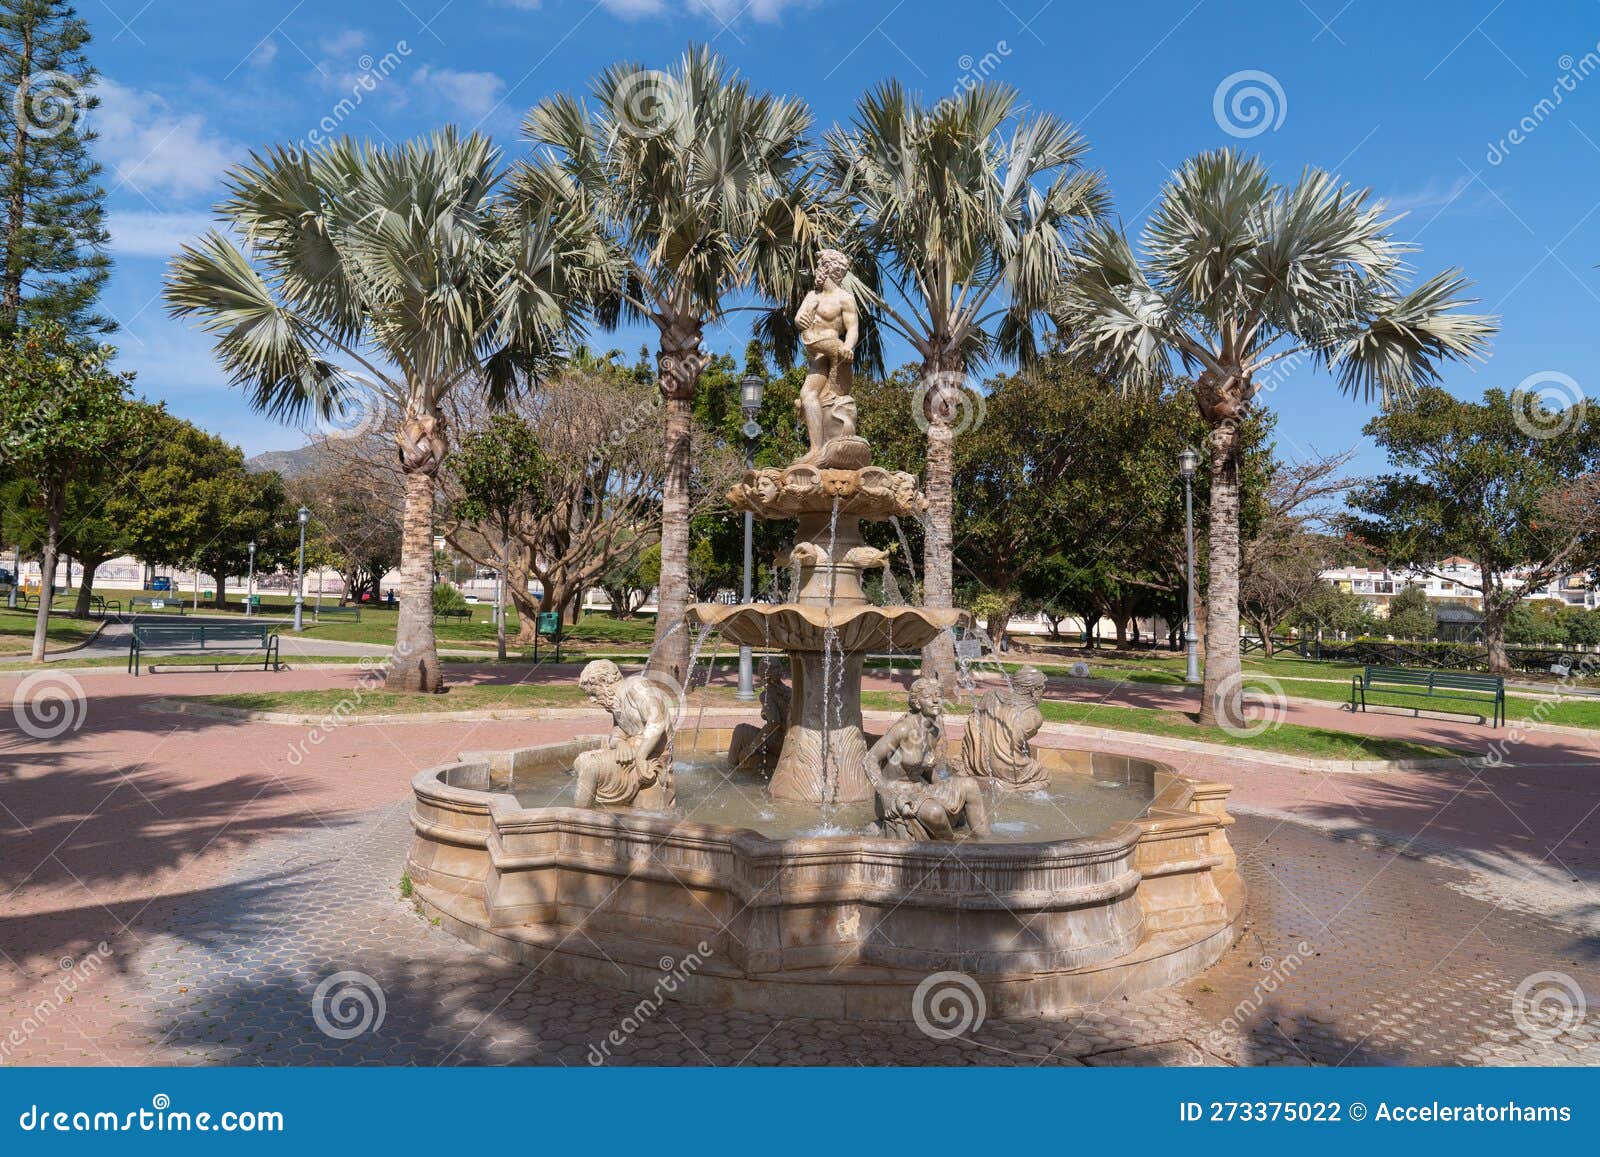 torremolinos park statue and palm trees in parque la bateria andalusia spain